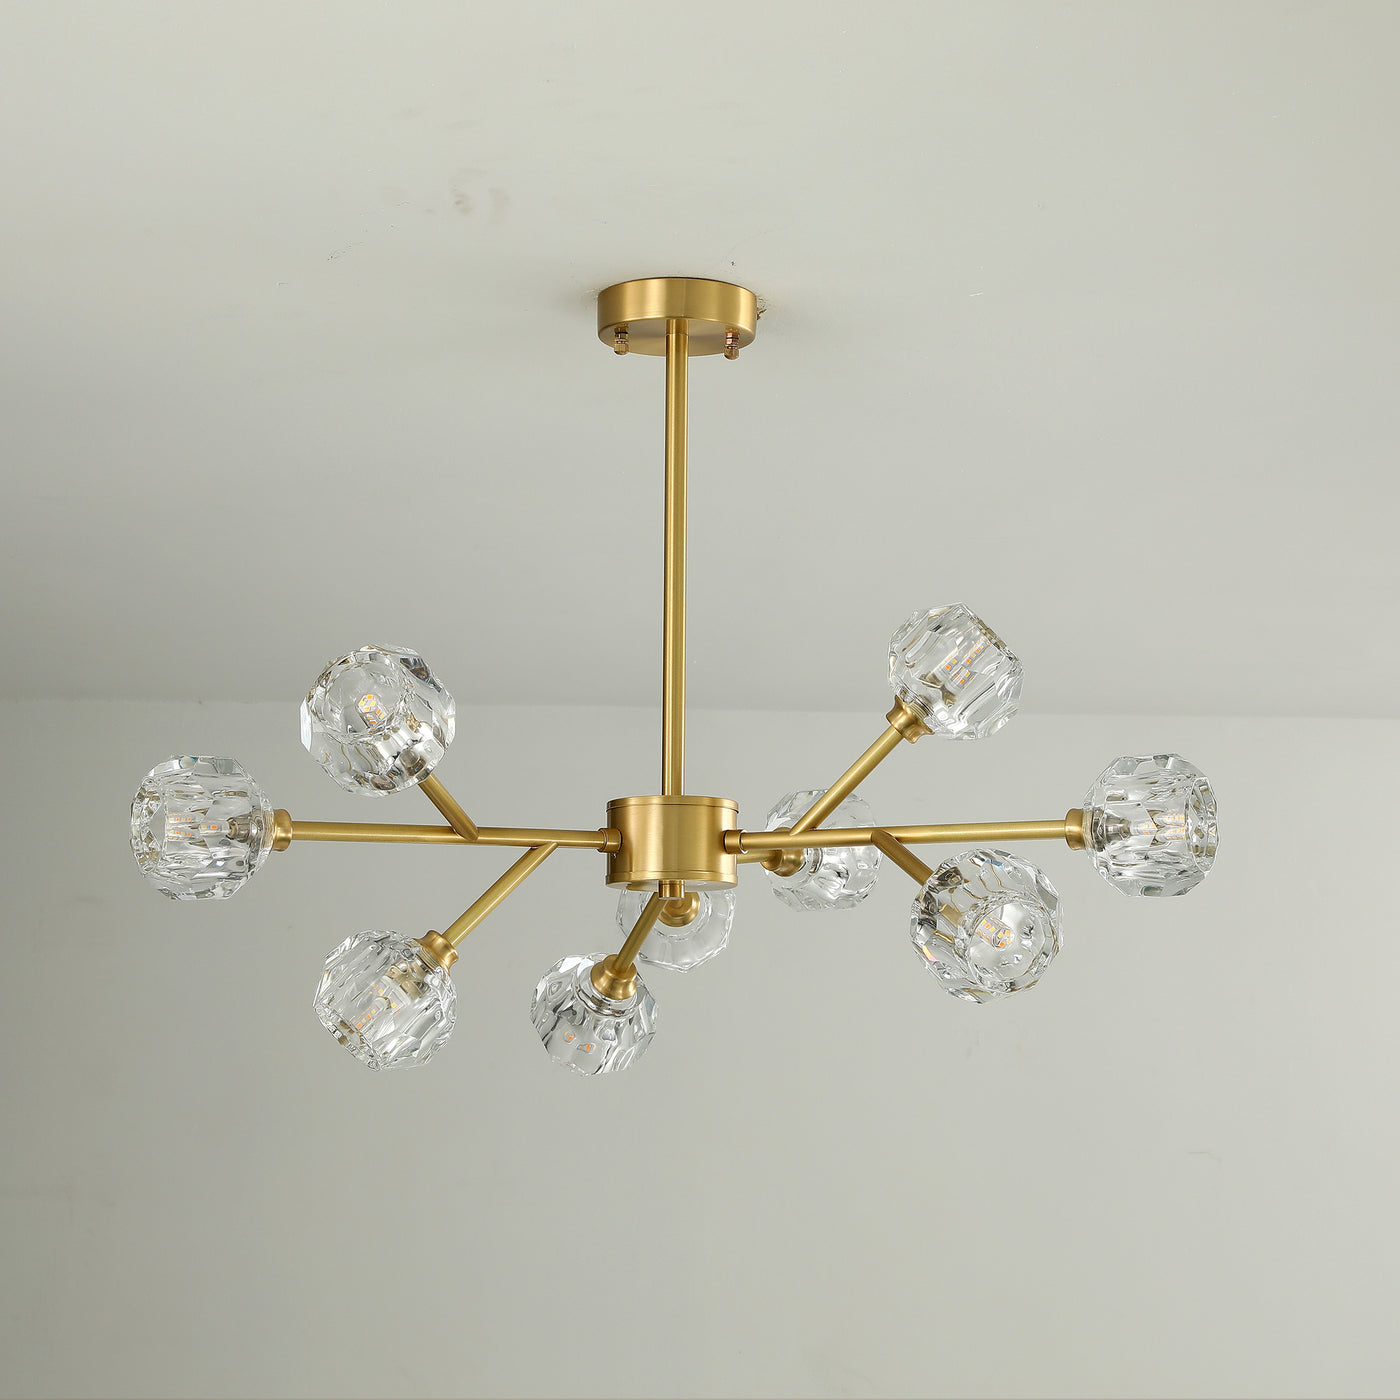 Postmodern luxury and full copper chandelier